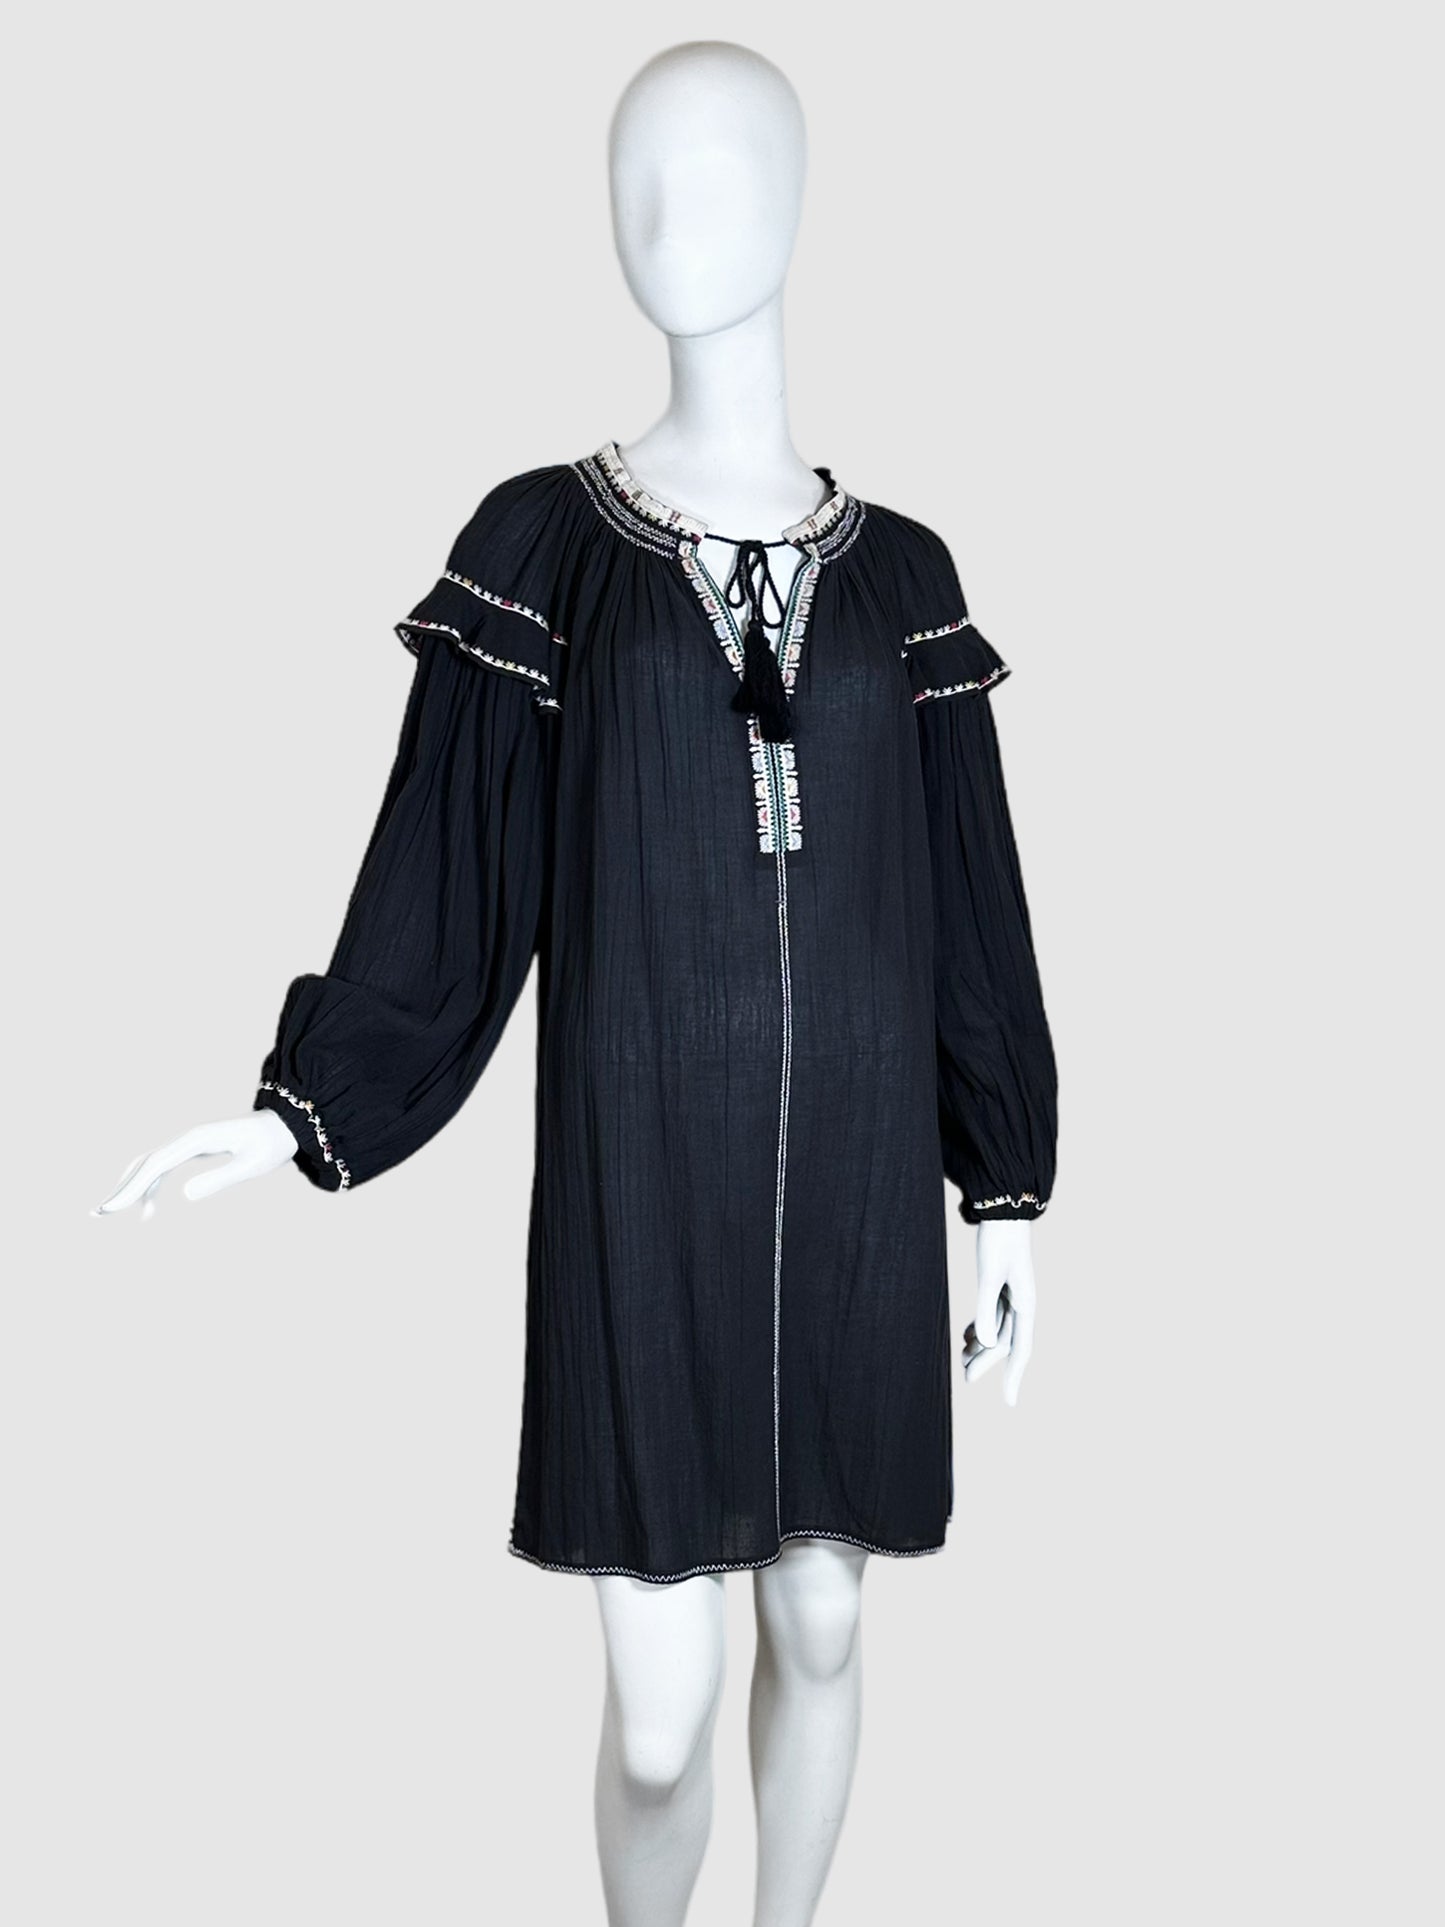 Isabel Marant Bohemian Tunic-Dress - Size 36